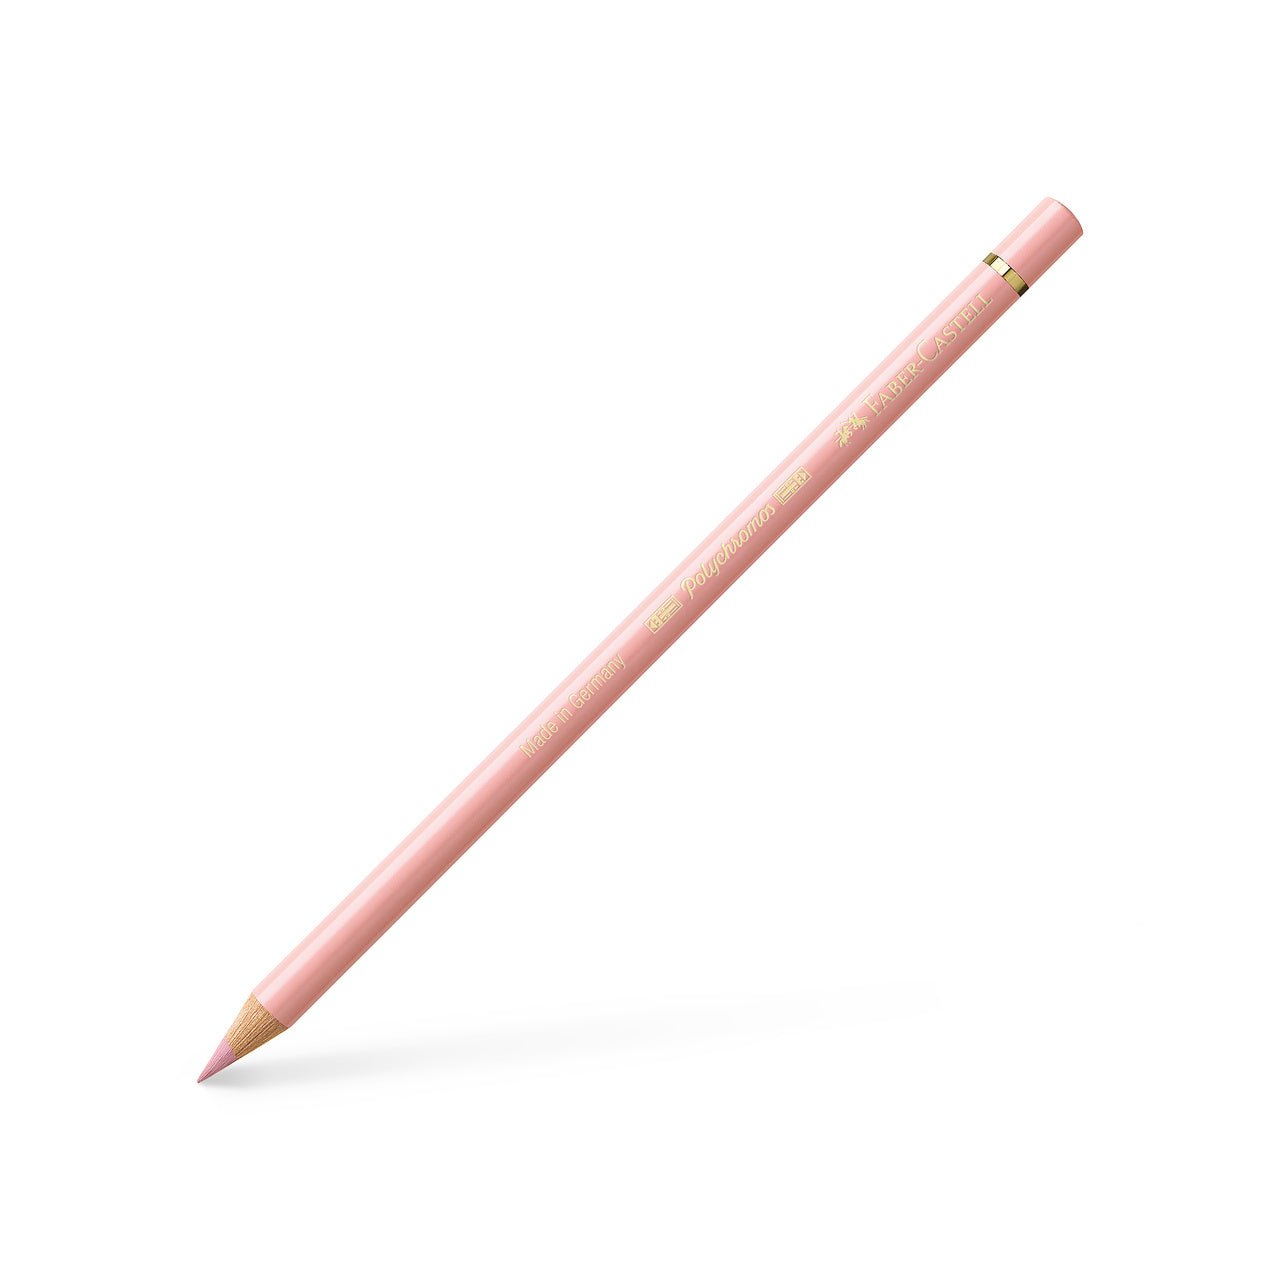 Complete List of Faber-Castell Polychromos Colour Pencils